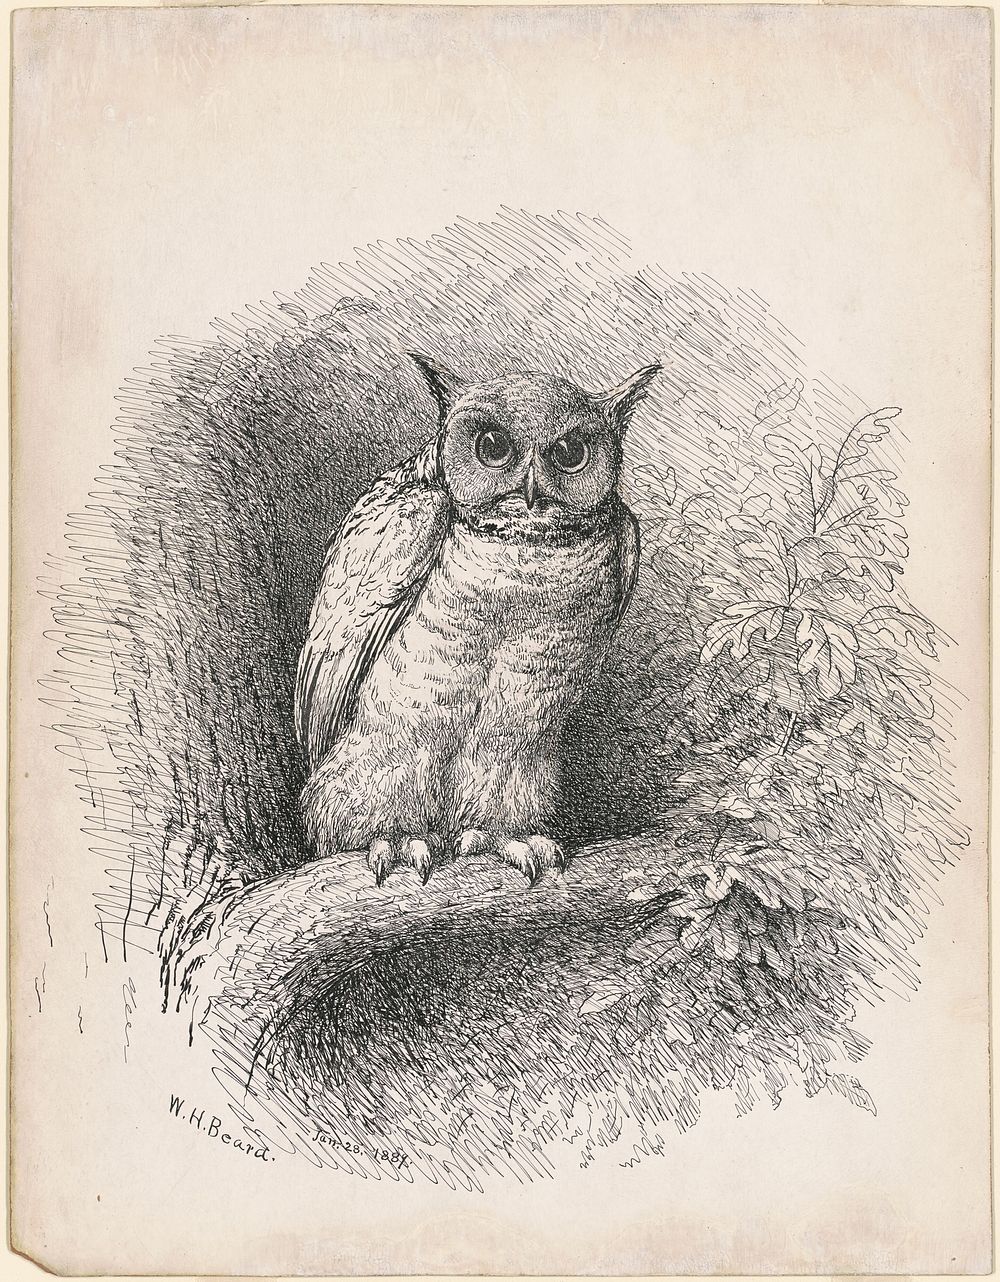 Owl (1889) by William Holbrook Beard.  